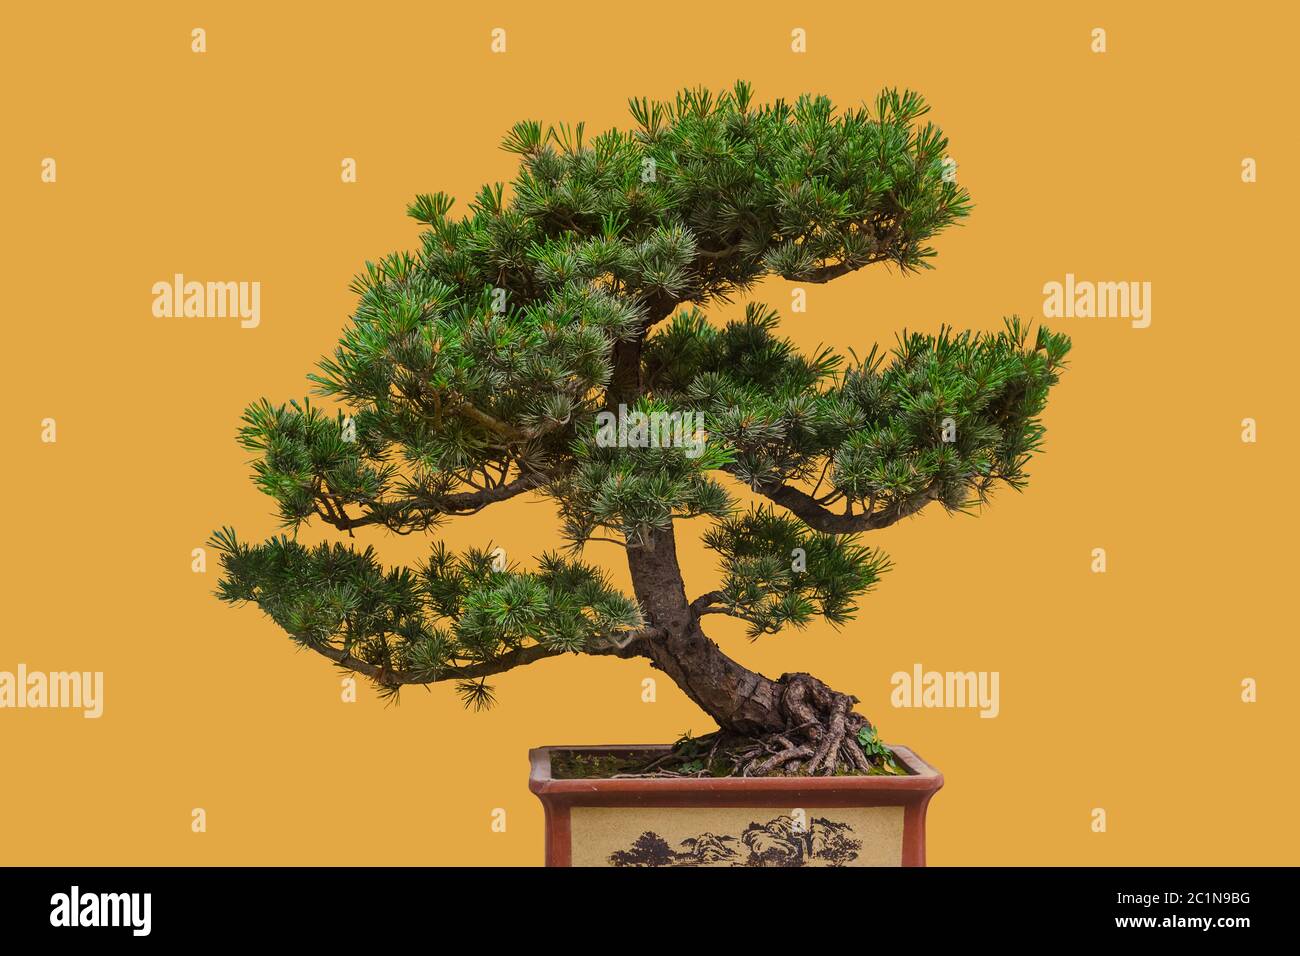 Bonsai tree on yellow background Stock Photo